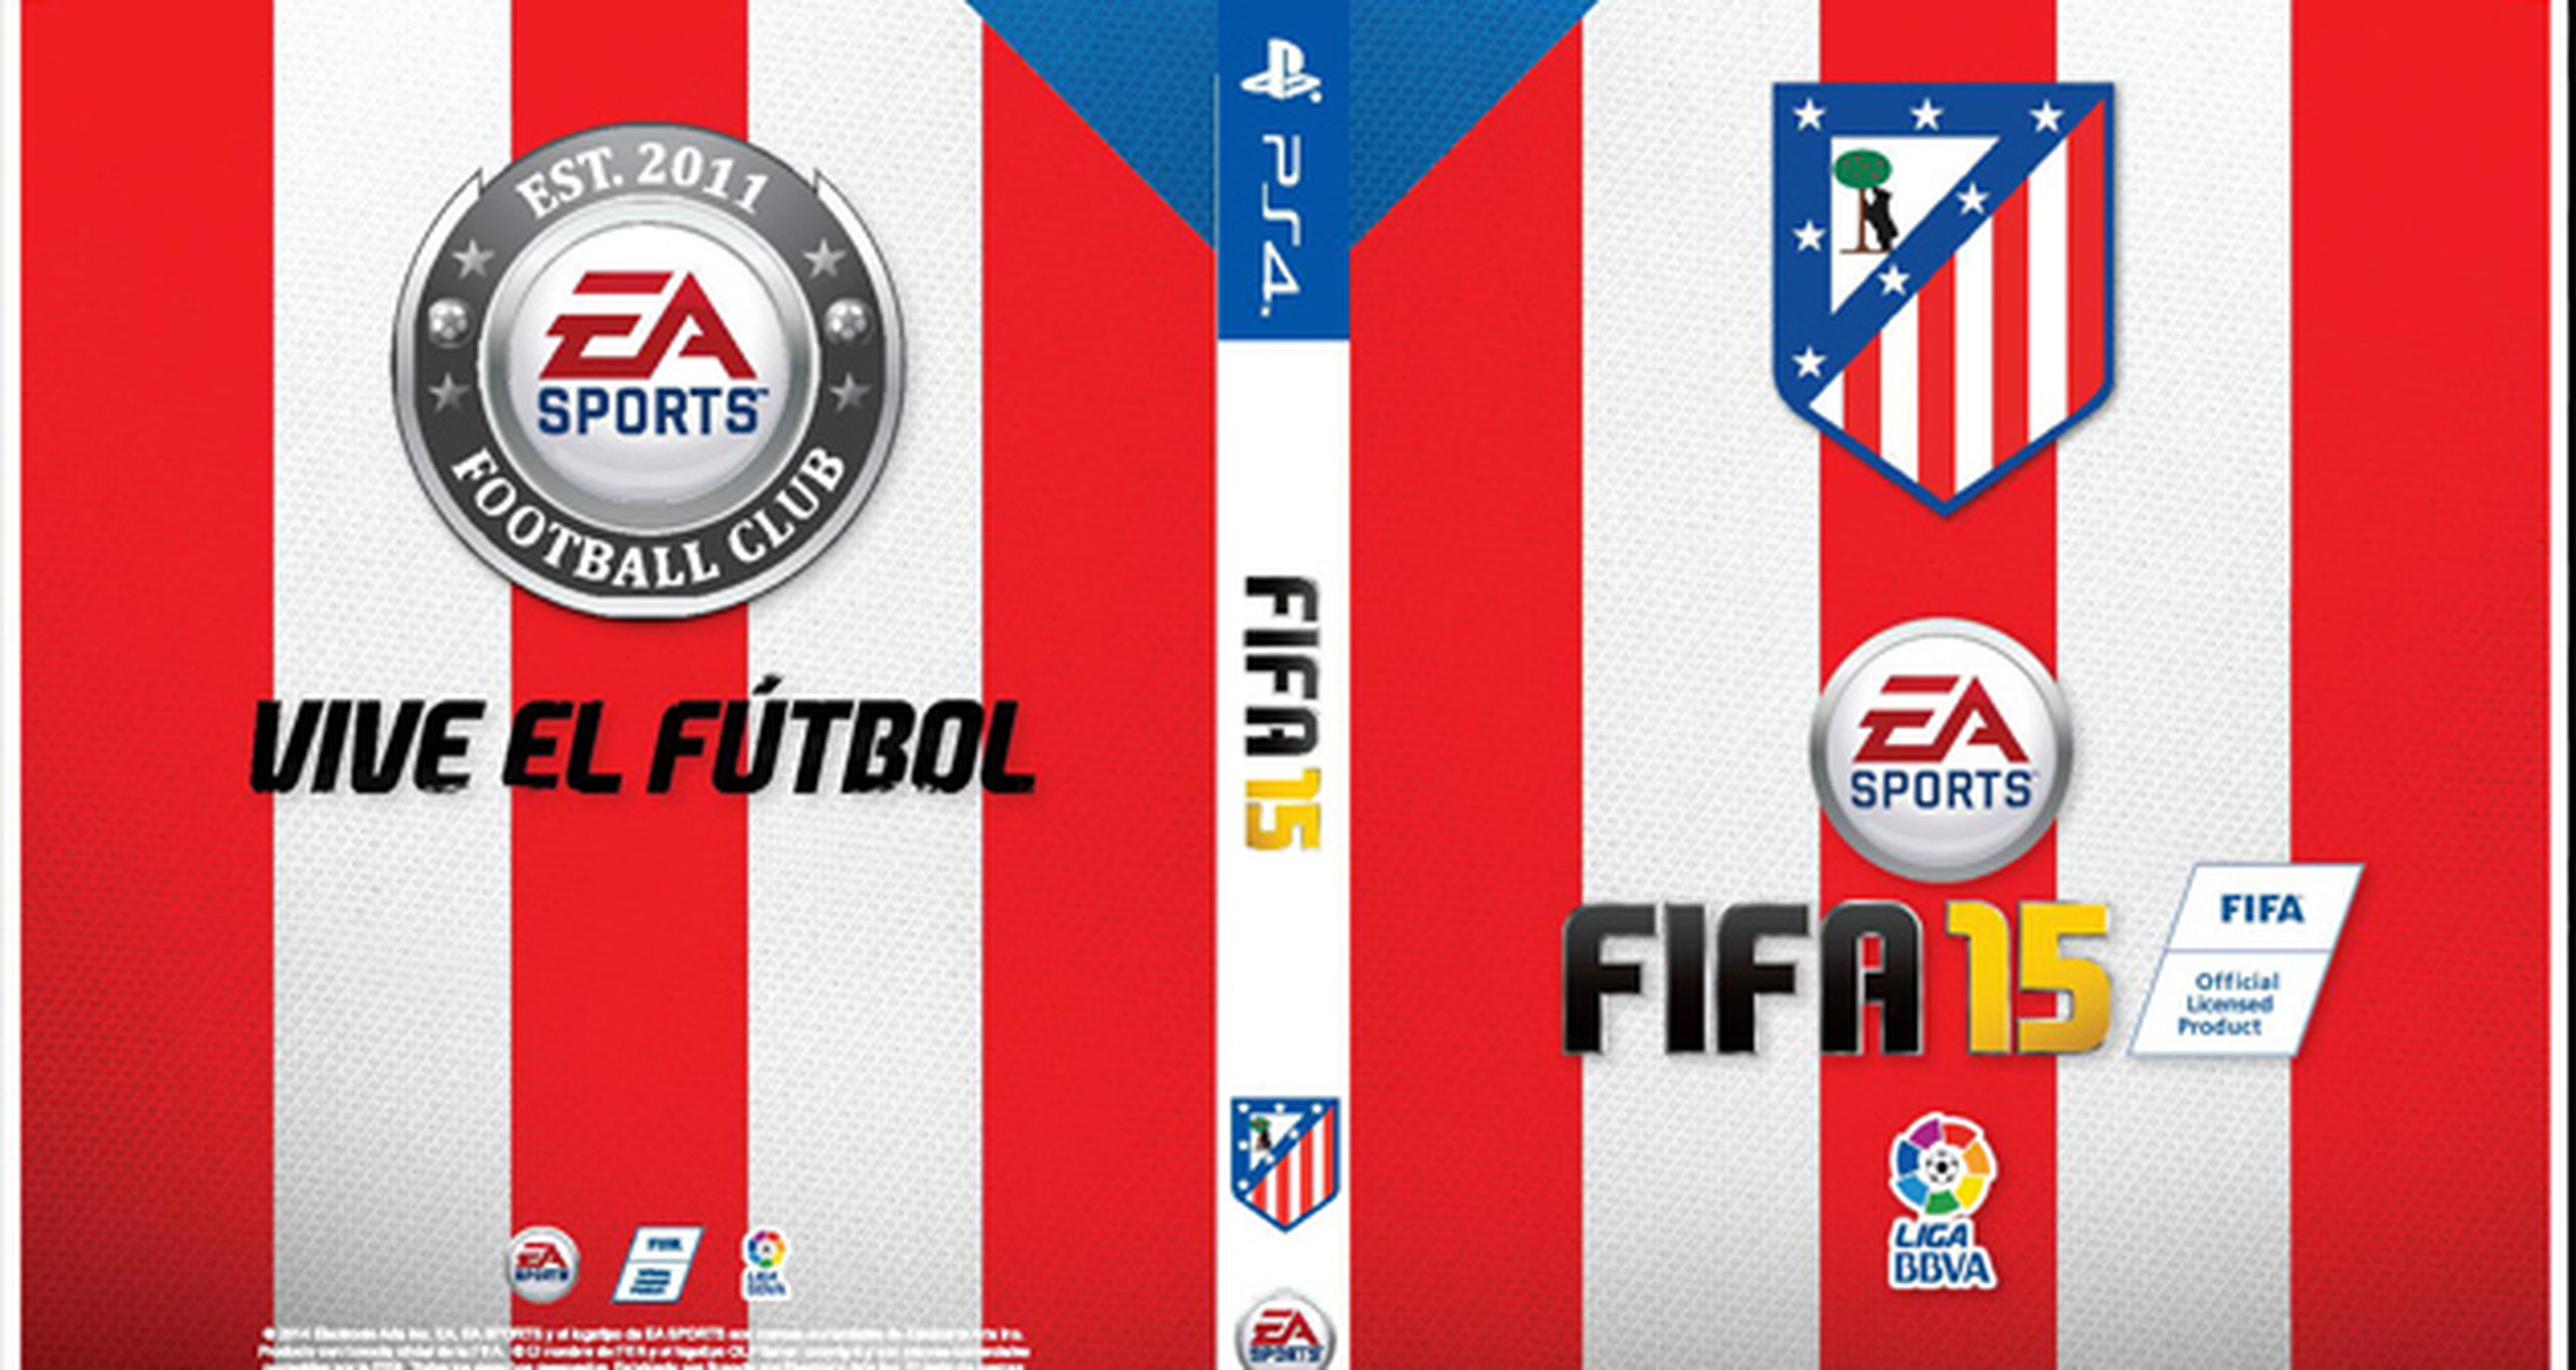 Personaliza la portada de FIFA 15 con tu equipo favorito